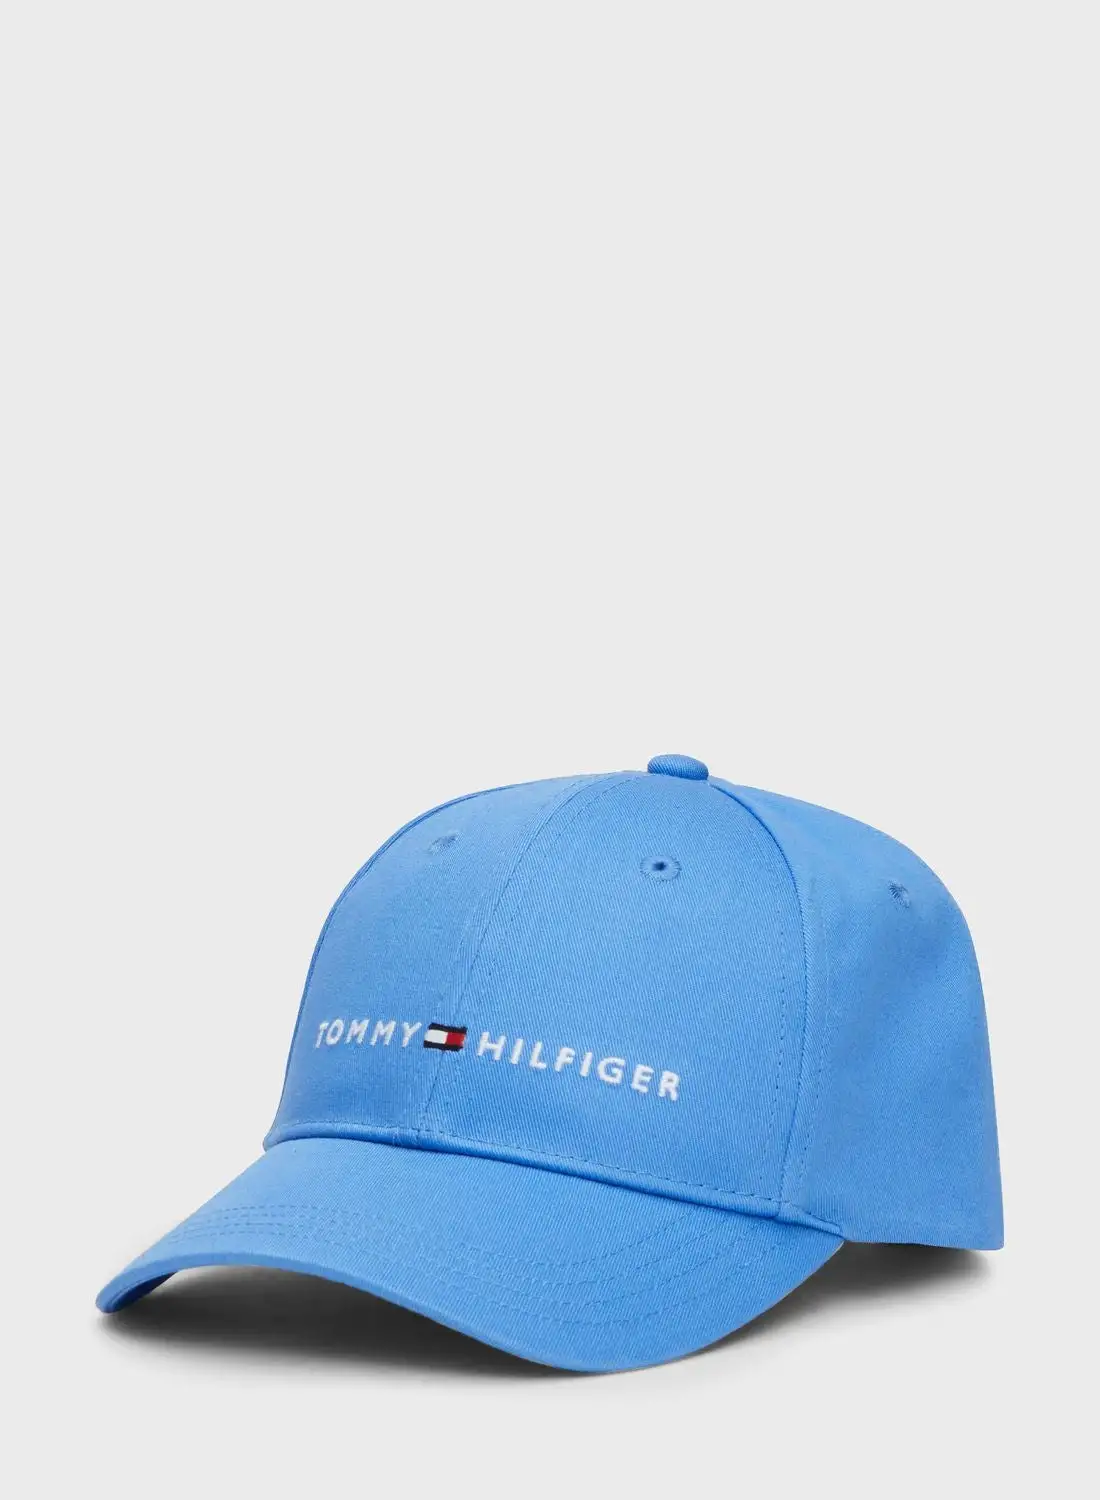 TOMMY HILFIGER Kids Printed Bucket Hat